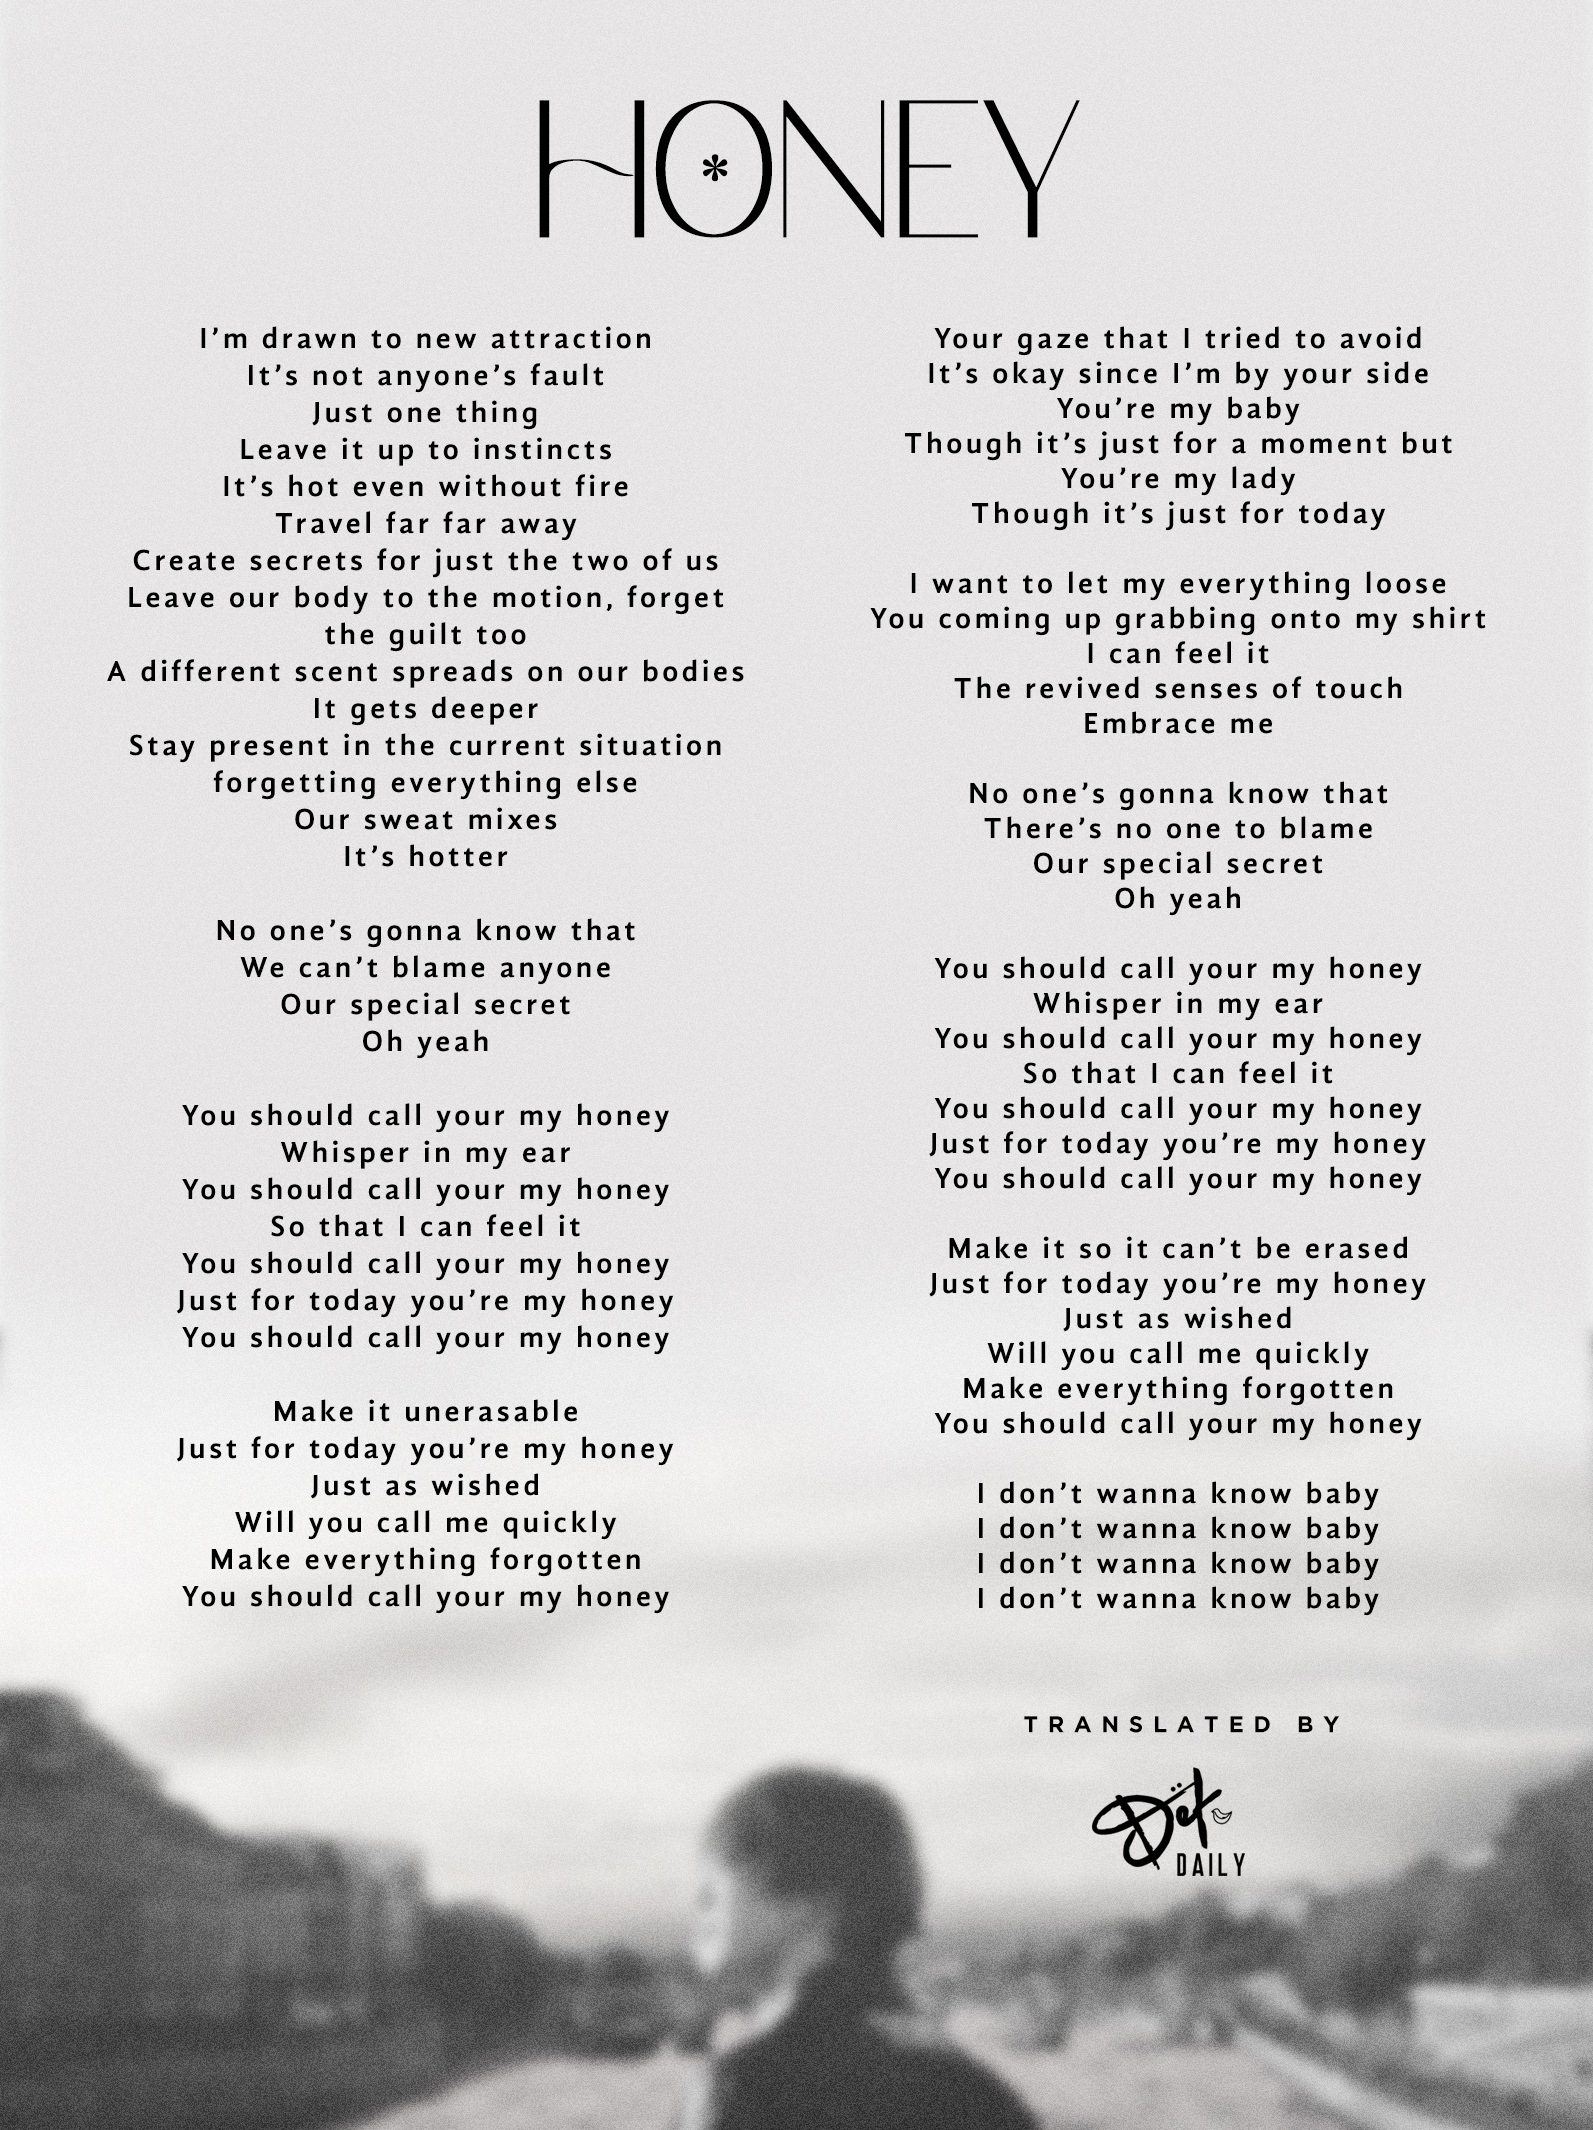 for JAY B/Def.¨ on X: [LYRICS TRANSLATION] 2. LAST PIECE Lyrics